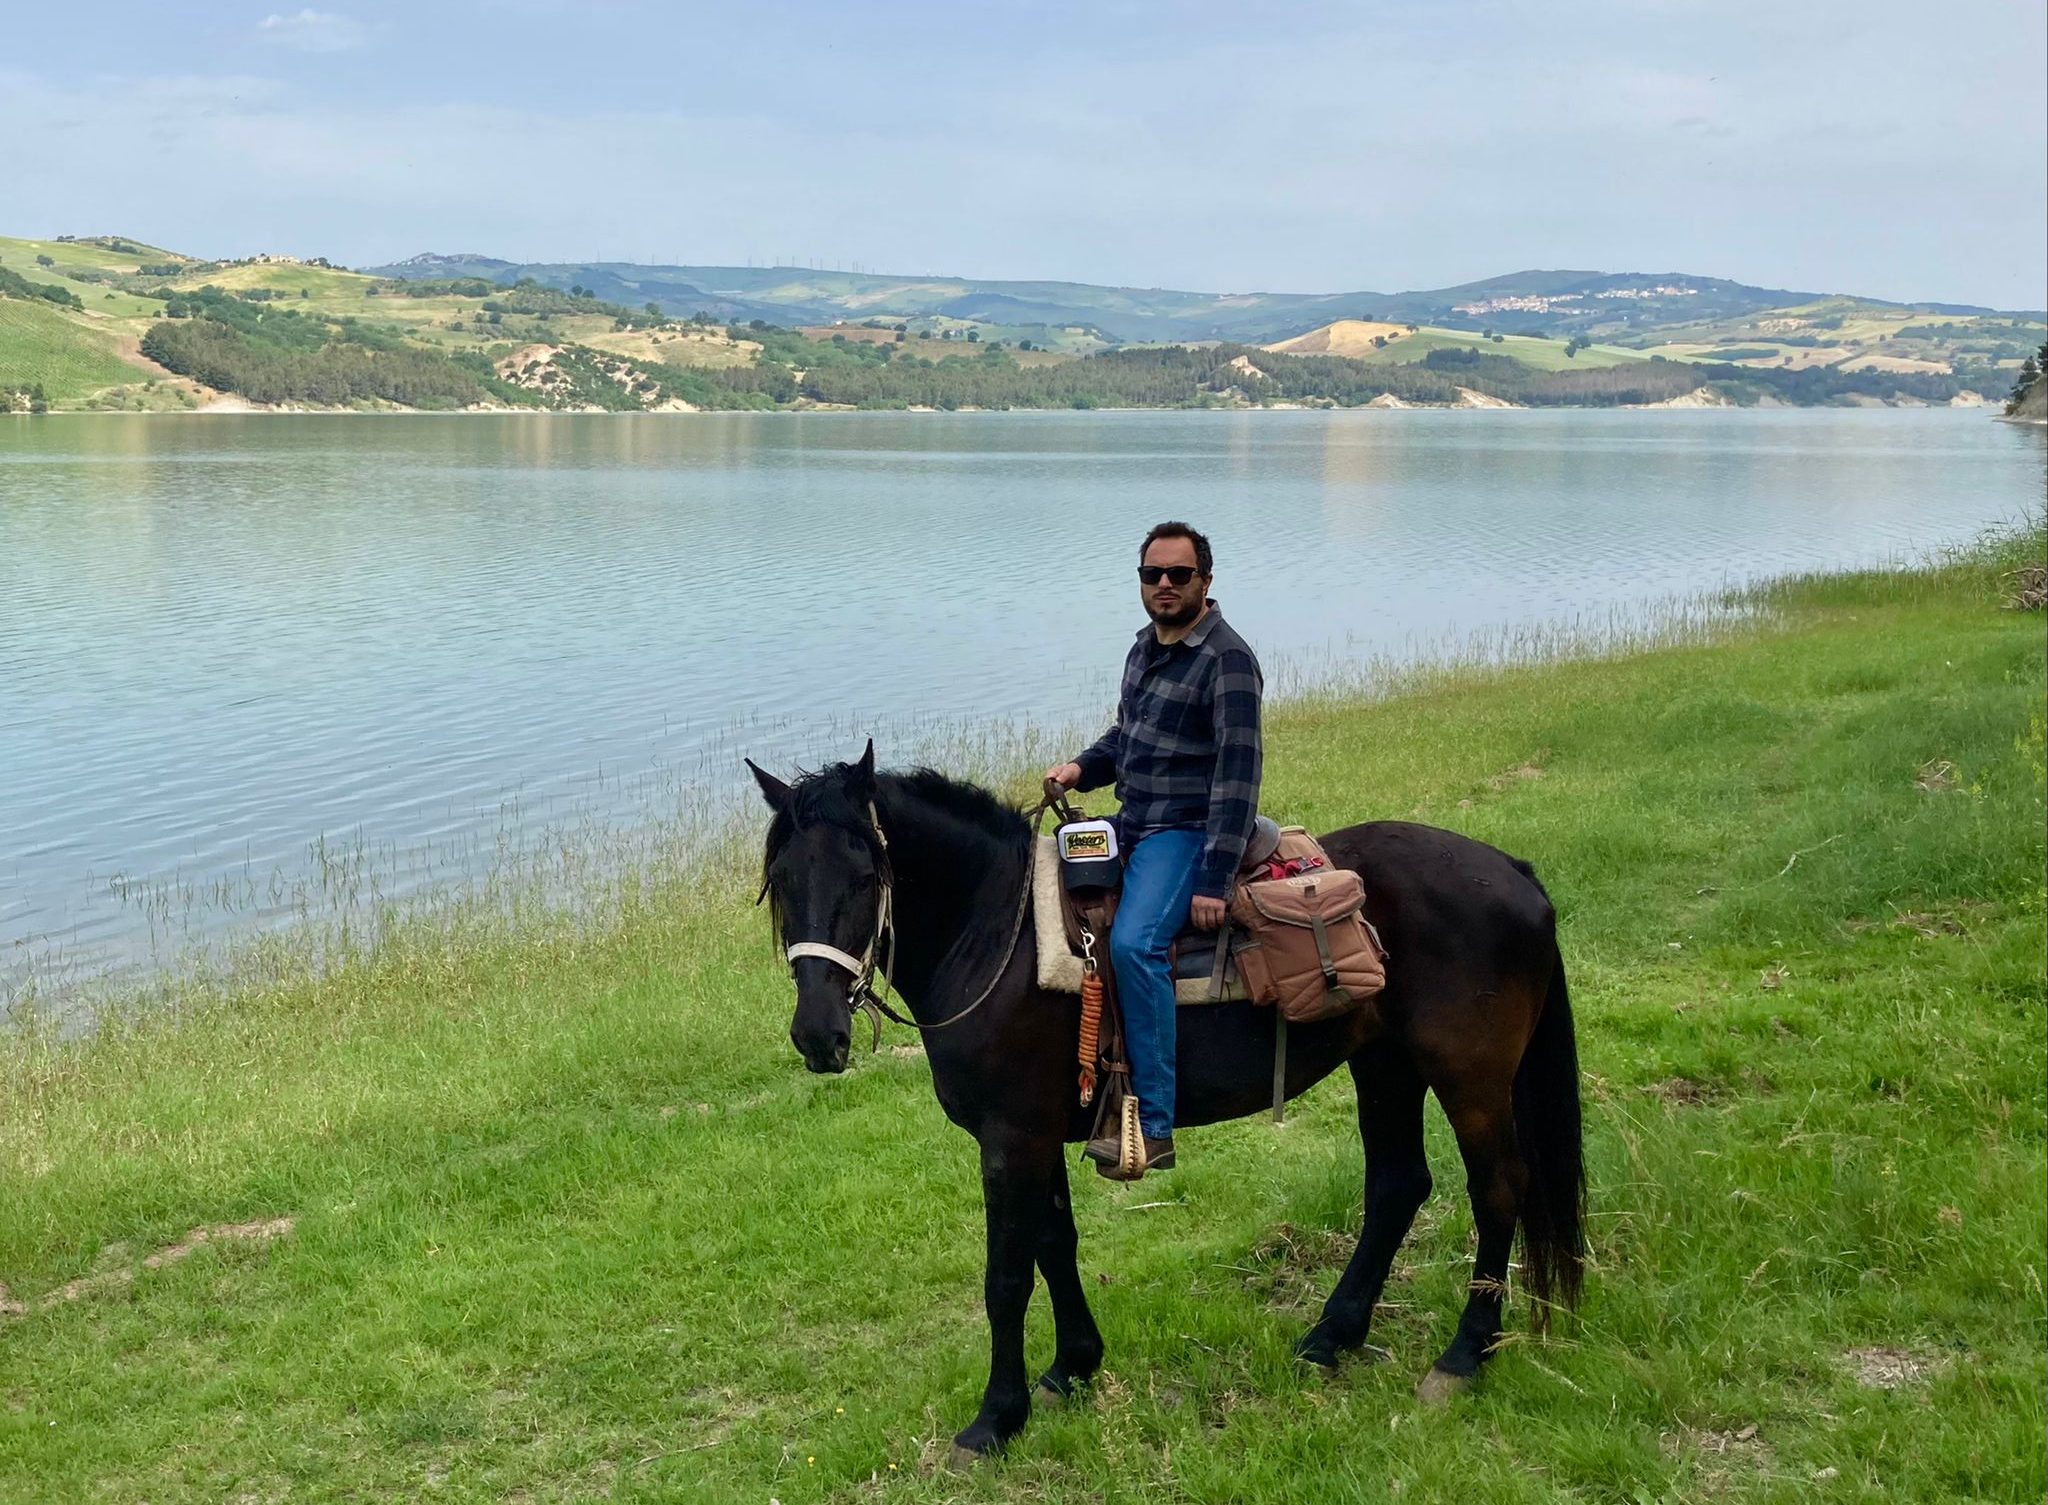 Vacanze a cavallo – Turismo lento a cavallo in Italia con HorseTouring